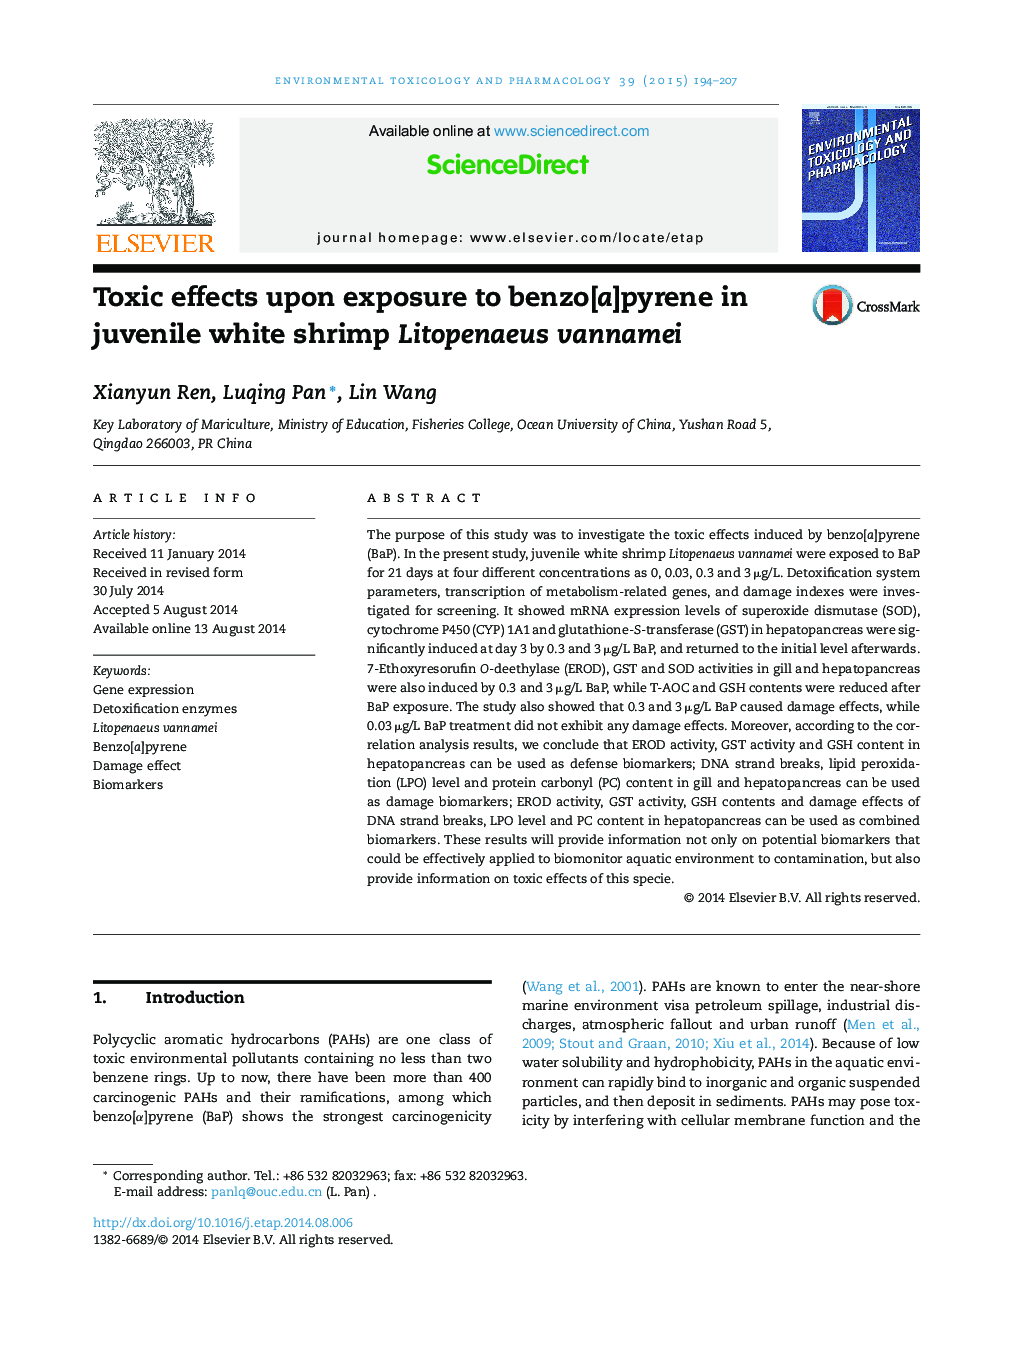 Toxic effects upon exposure to benzo[a]pyrene in juvenile white shrimp Litopenaeus vannamei